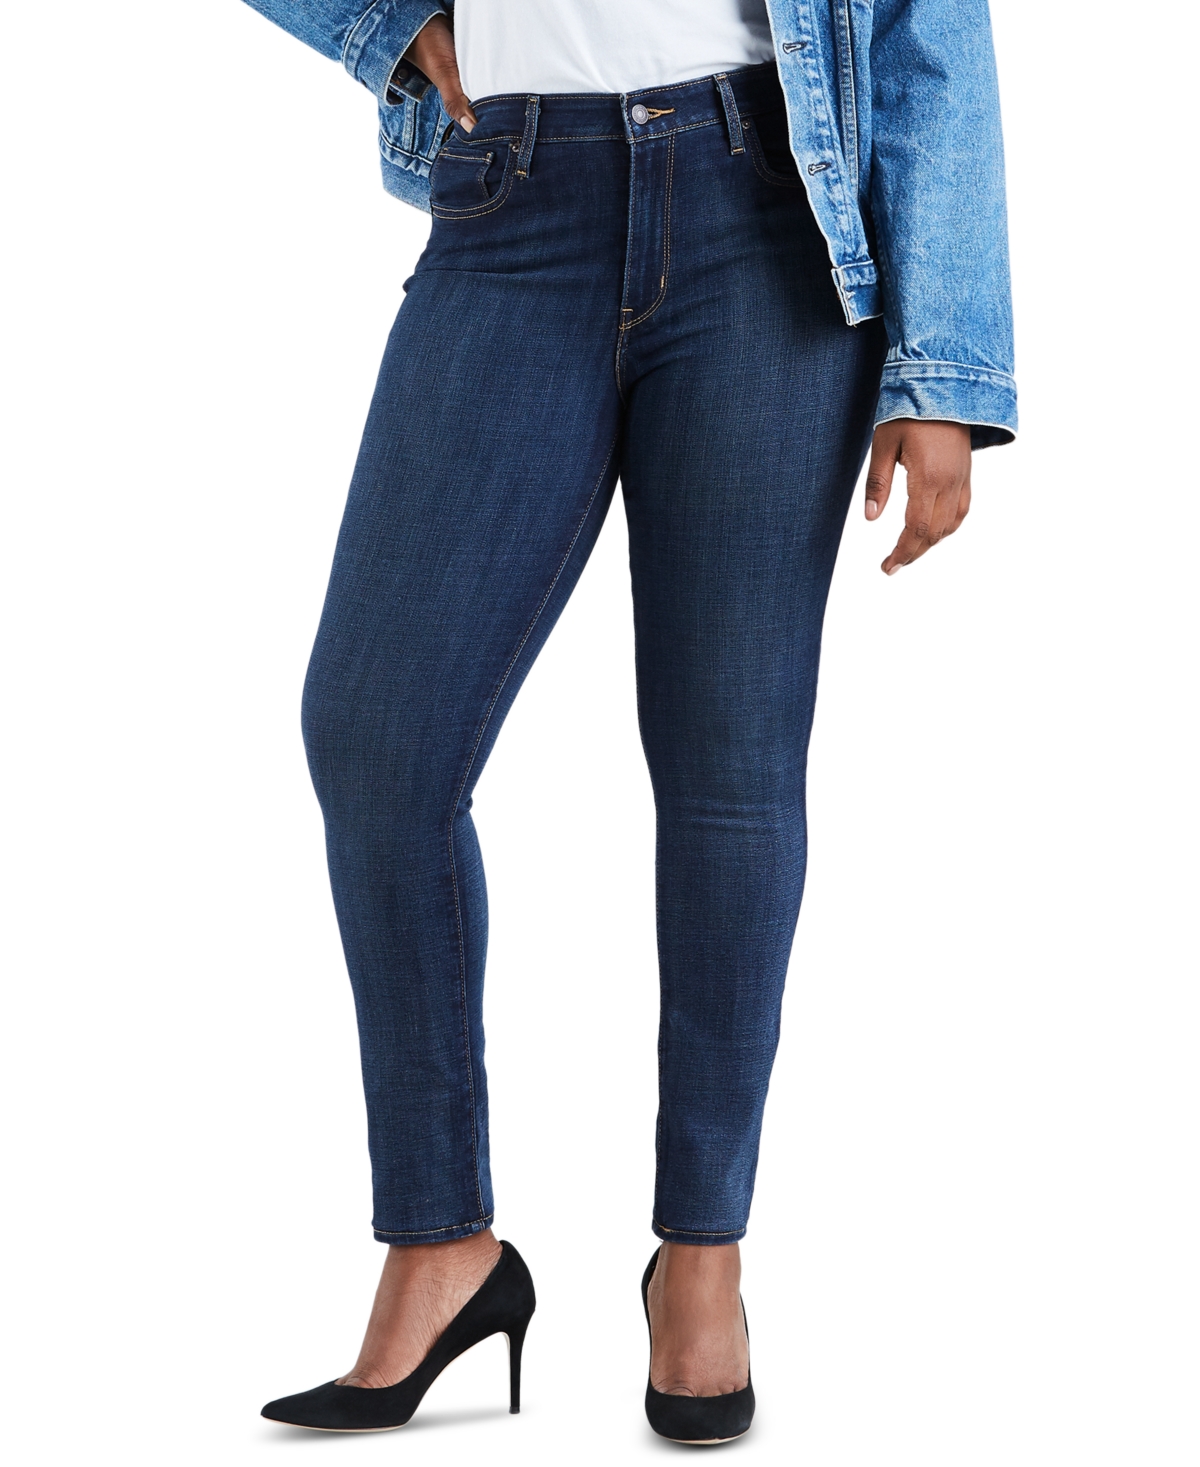 Women's 721 High-Rise Skinny Jeans in Long Length - Blue Story